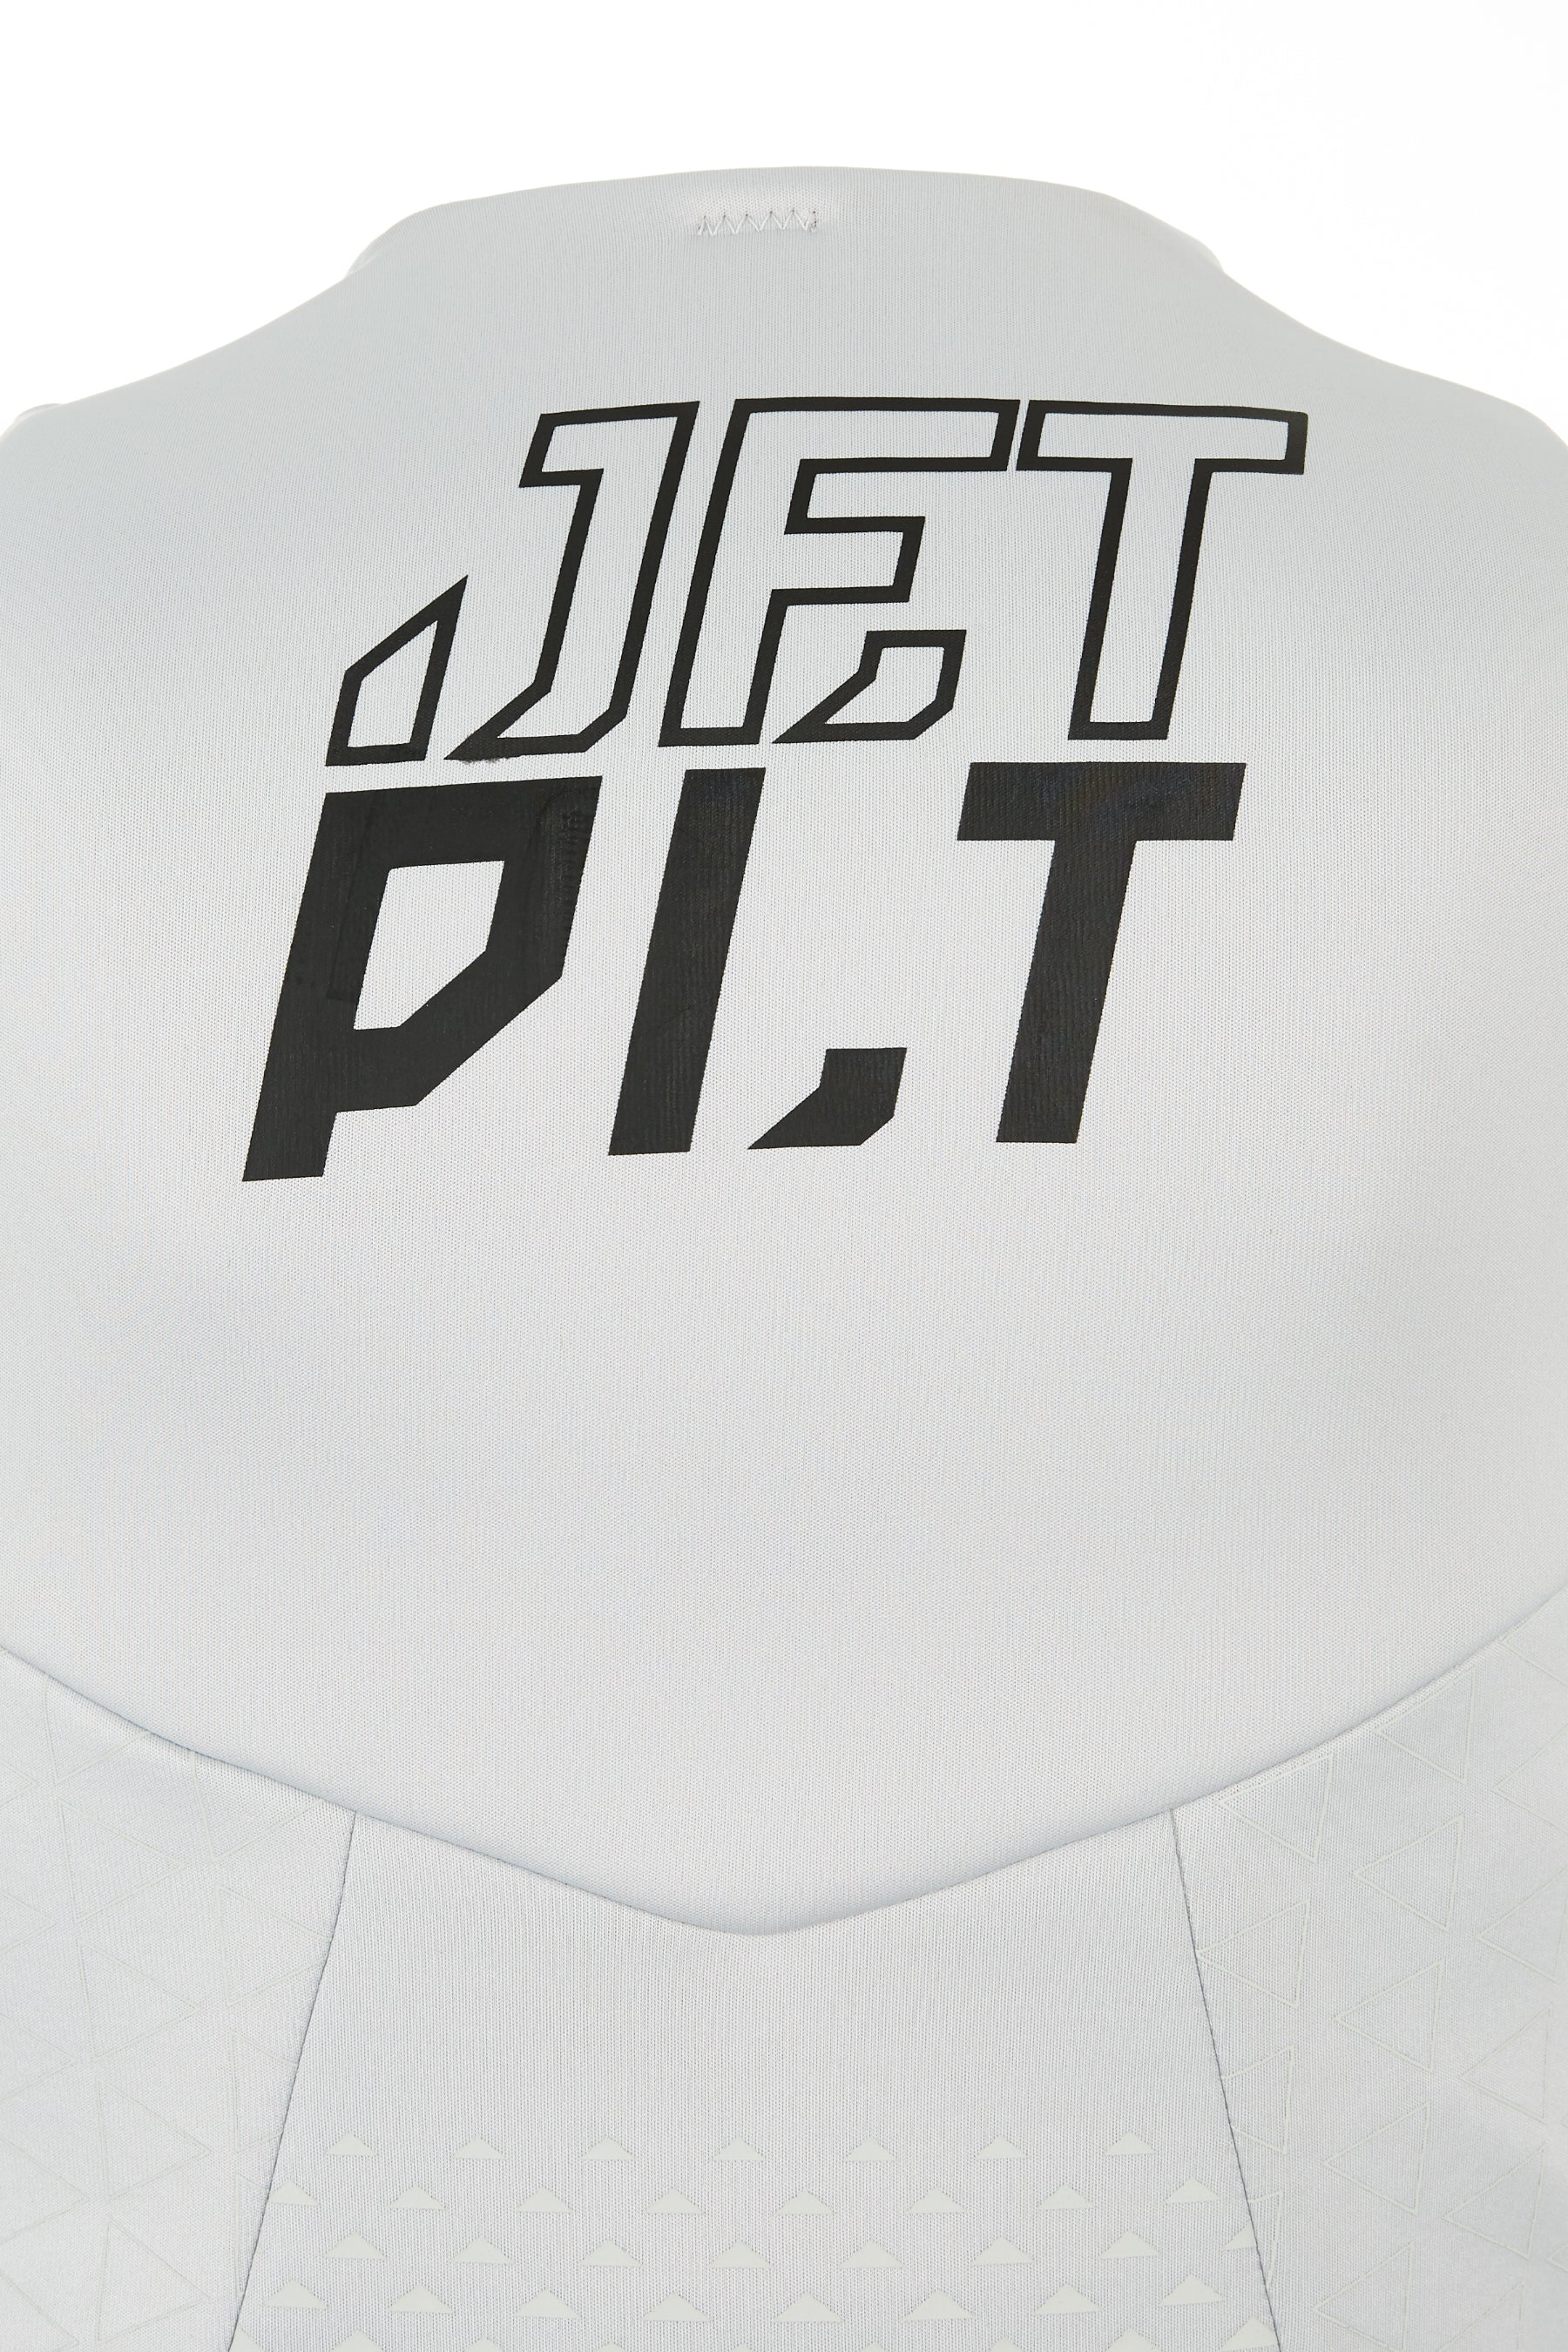 Jetpilot Cause Mens Neo Life Jacket - Grey